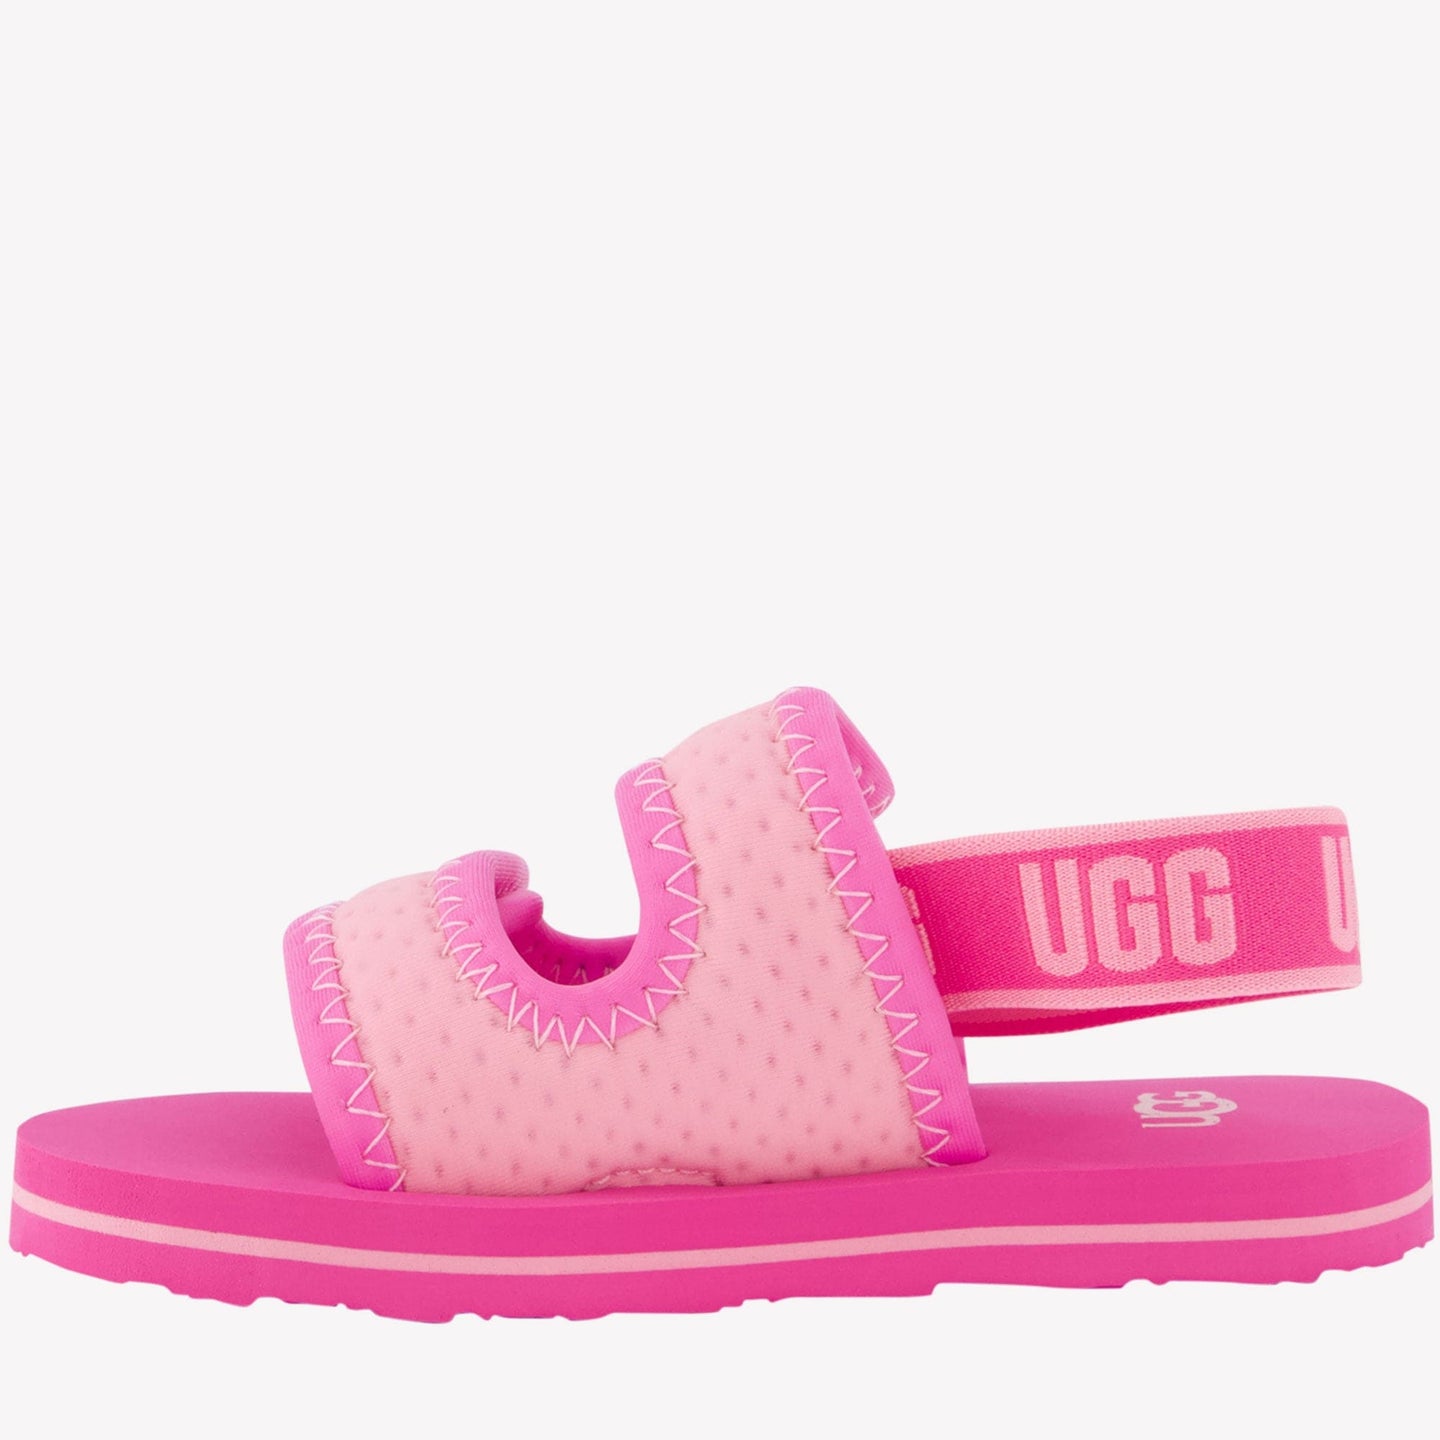 UGG Kinder Meisjes Sandalen Roze 22